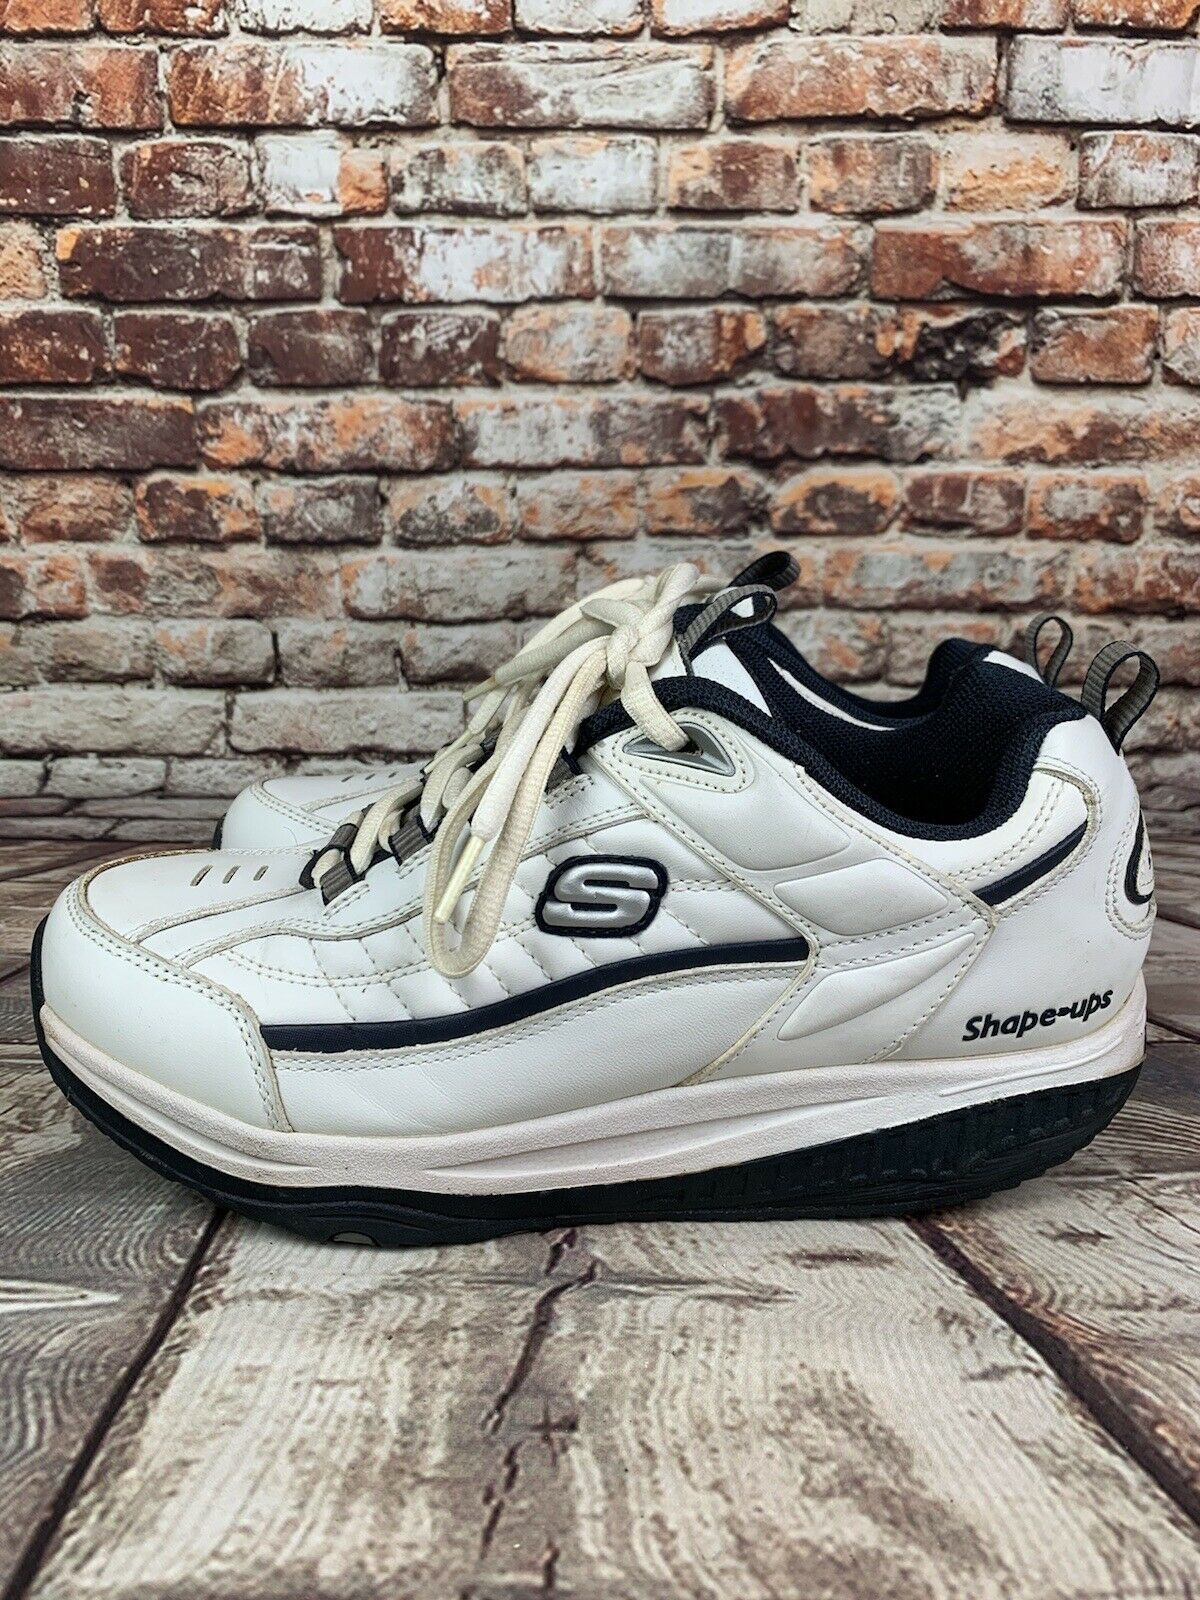 Skechers Shape Ups Toning Walking Shoes Mens Sz 9.5 White Leather Sneaker 50875